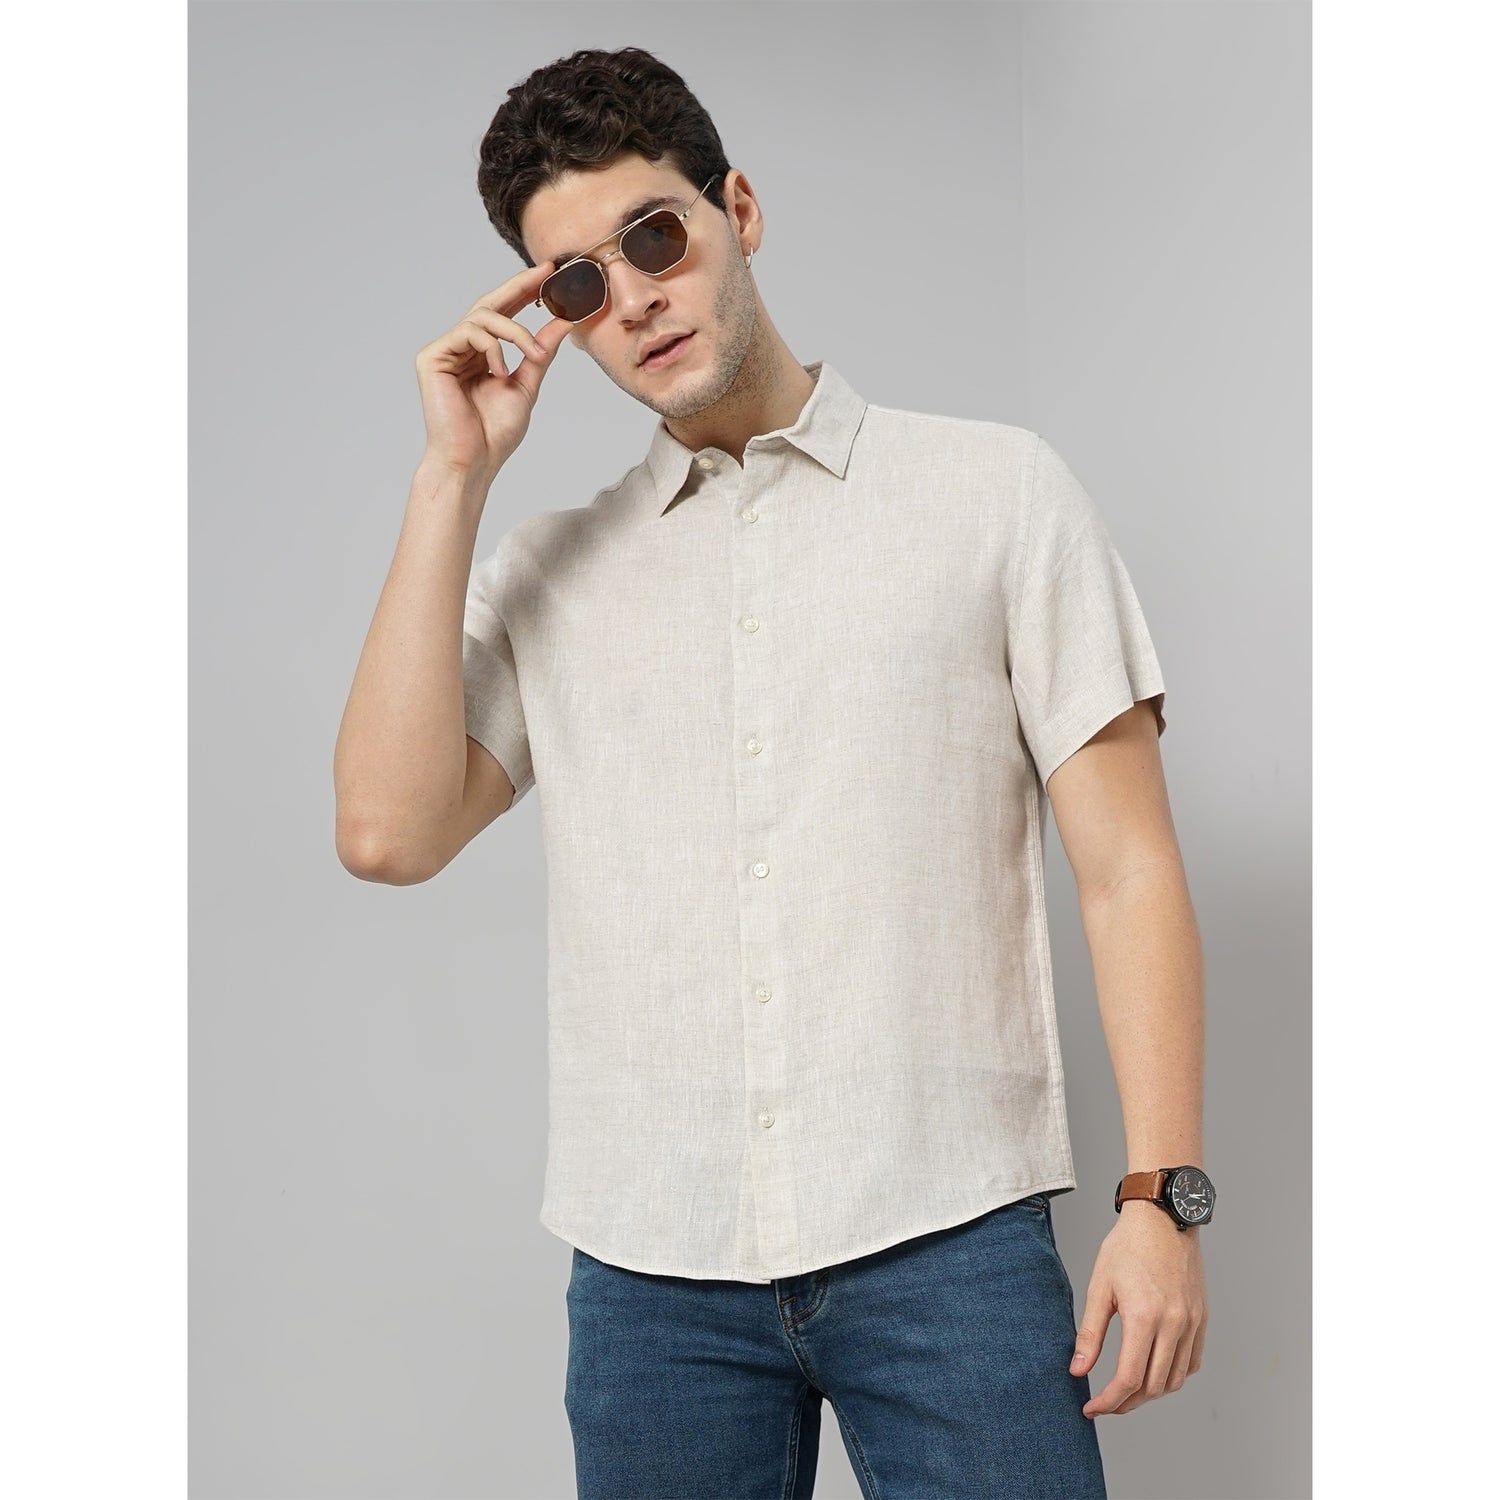 Men Off White Solid Regular Fit Linen Solid Casual Shirt (DAMARLININ)